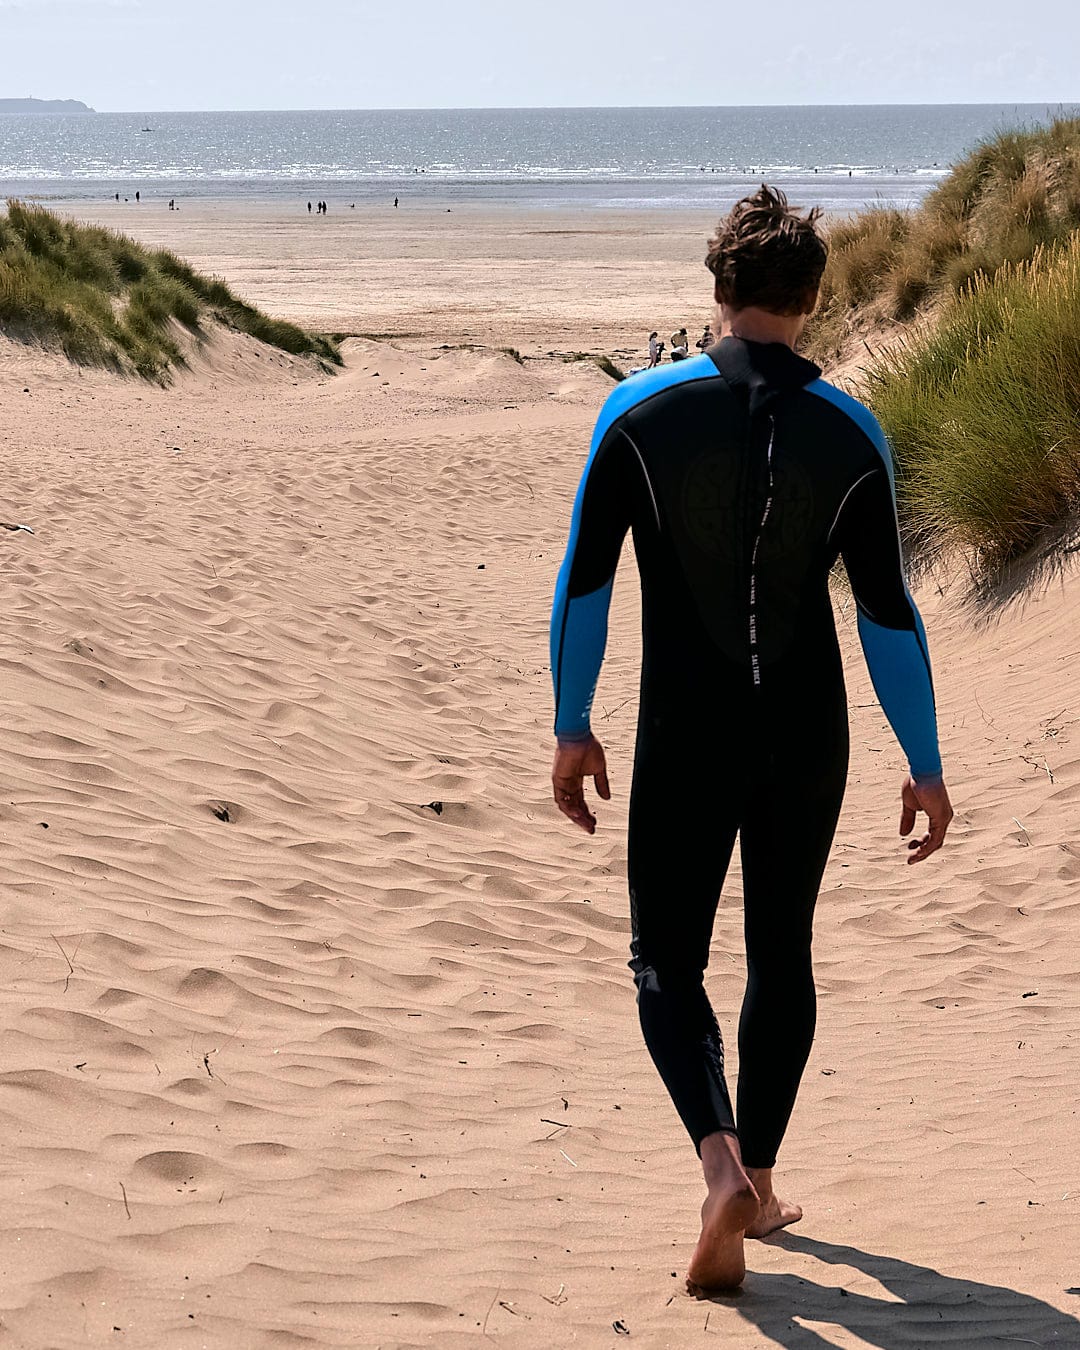 A man in a Saltrock Core - Mens 3/2 Full Wetsuit - Blue/Black walking down a beach.